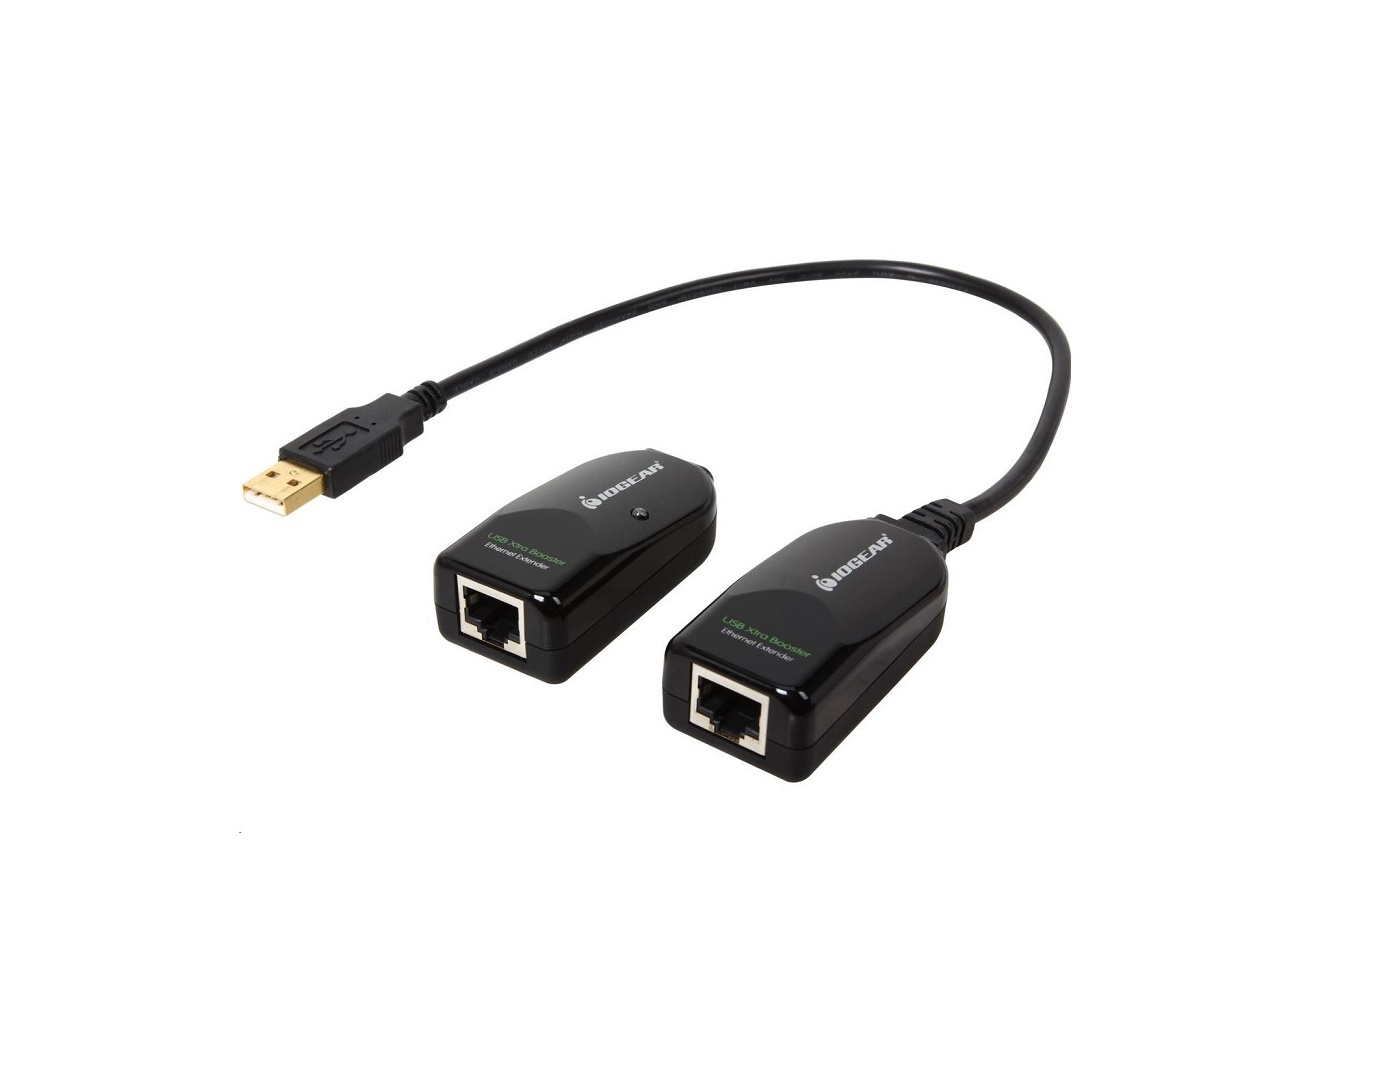 Iogear Usb 2.0 Boostlinq Ethernet Adapter GUCE62